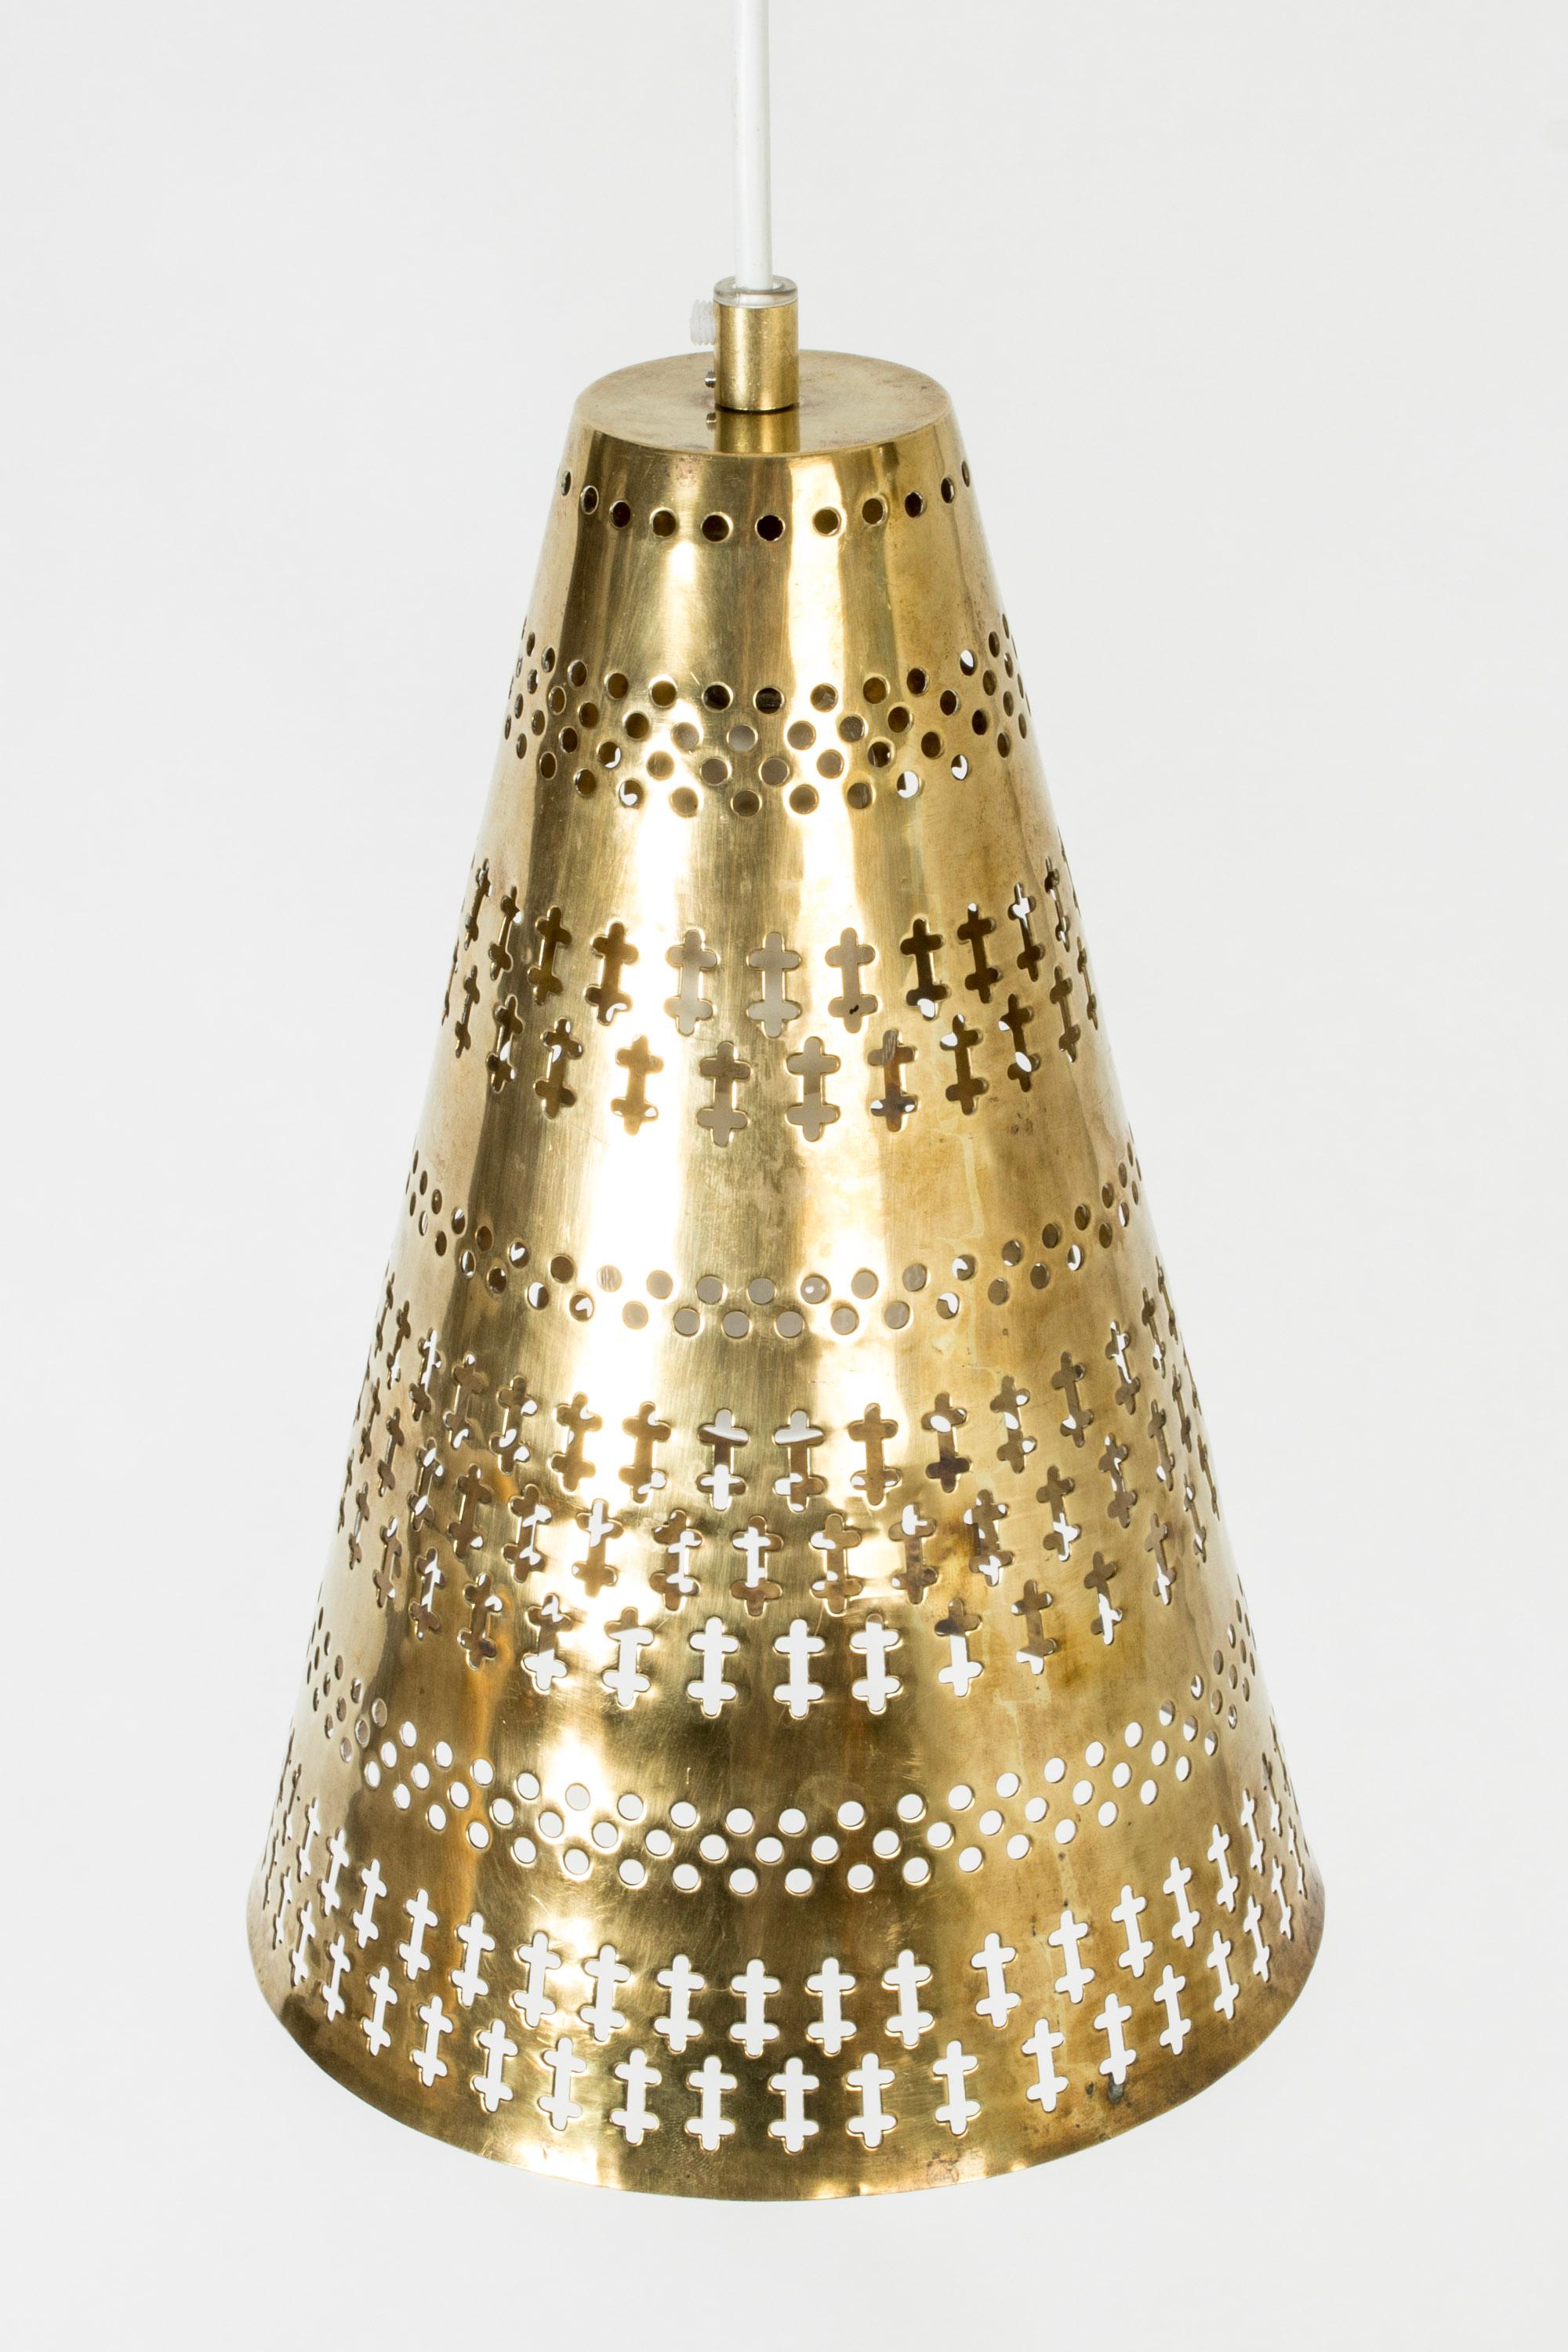 Swedish Midcentury Scandinavian Brass Pendant Lamp by Hans Bergström, Sweden, 1950s For Sale